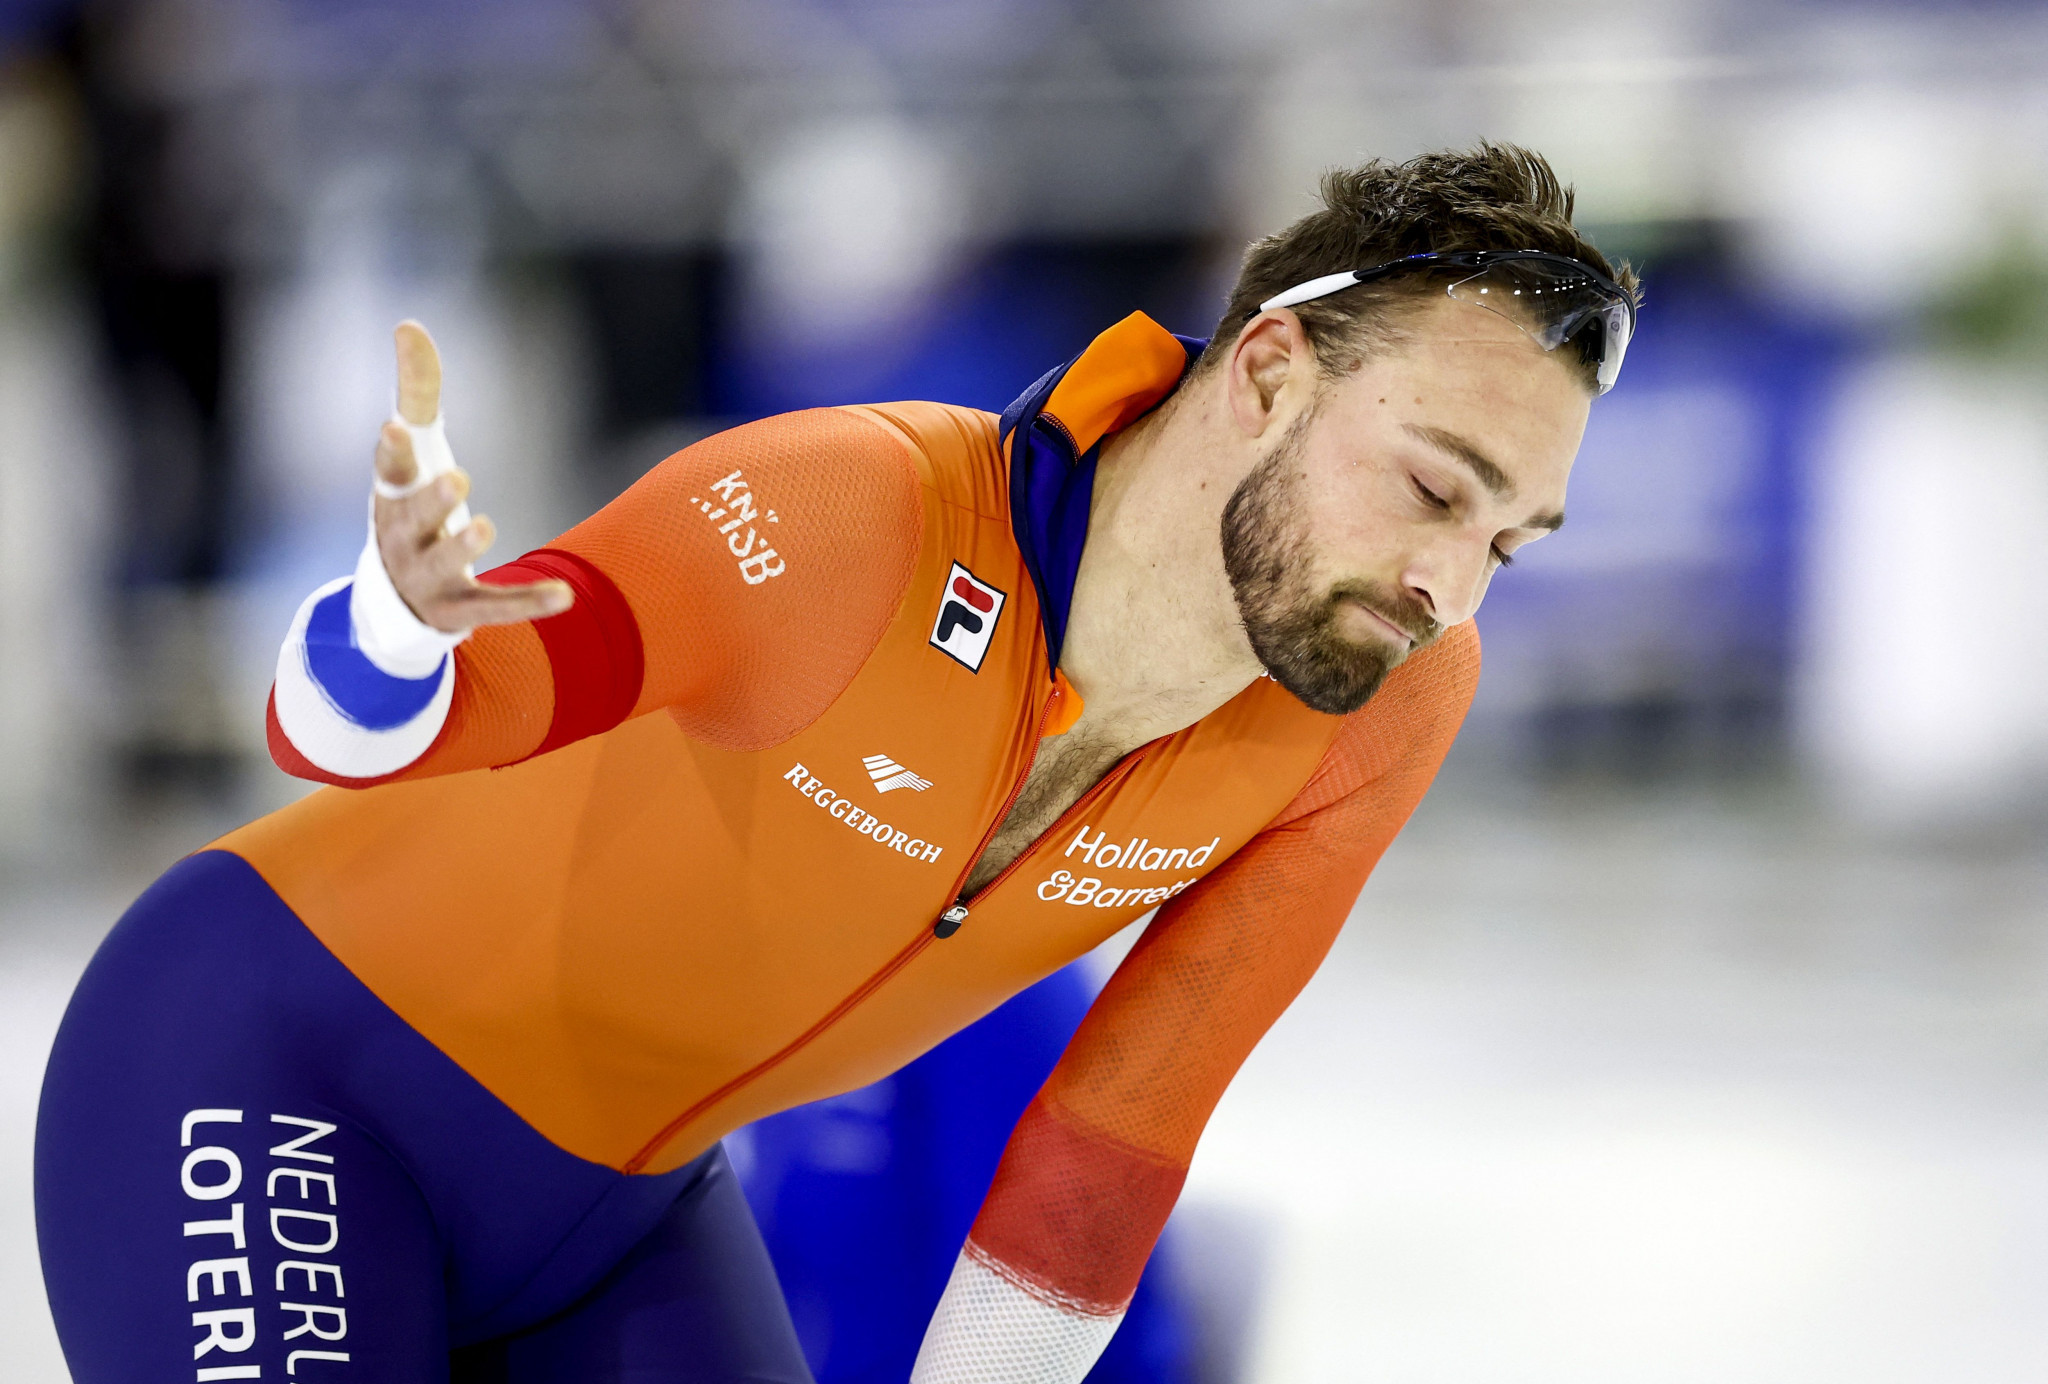 Kjeld Nuis earned one of four Dutch gold medals in Heerenveen today ©Getty Images